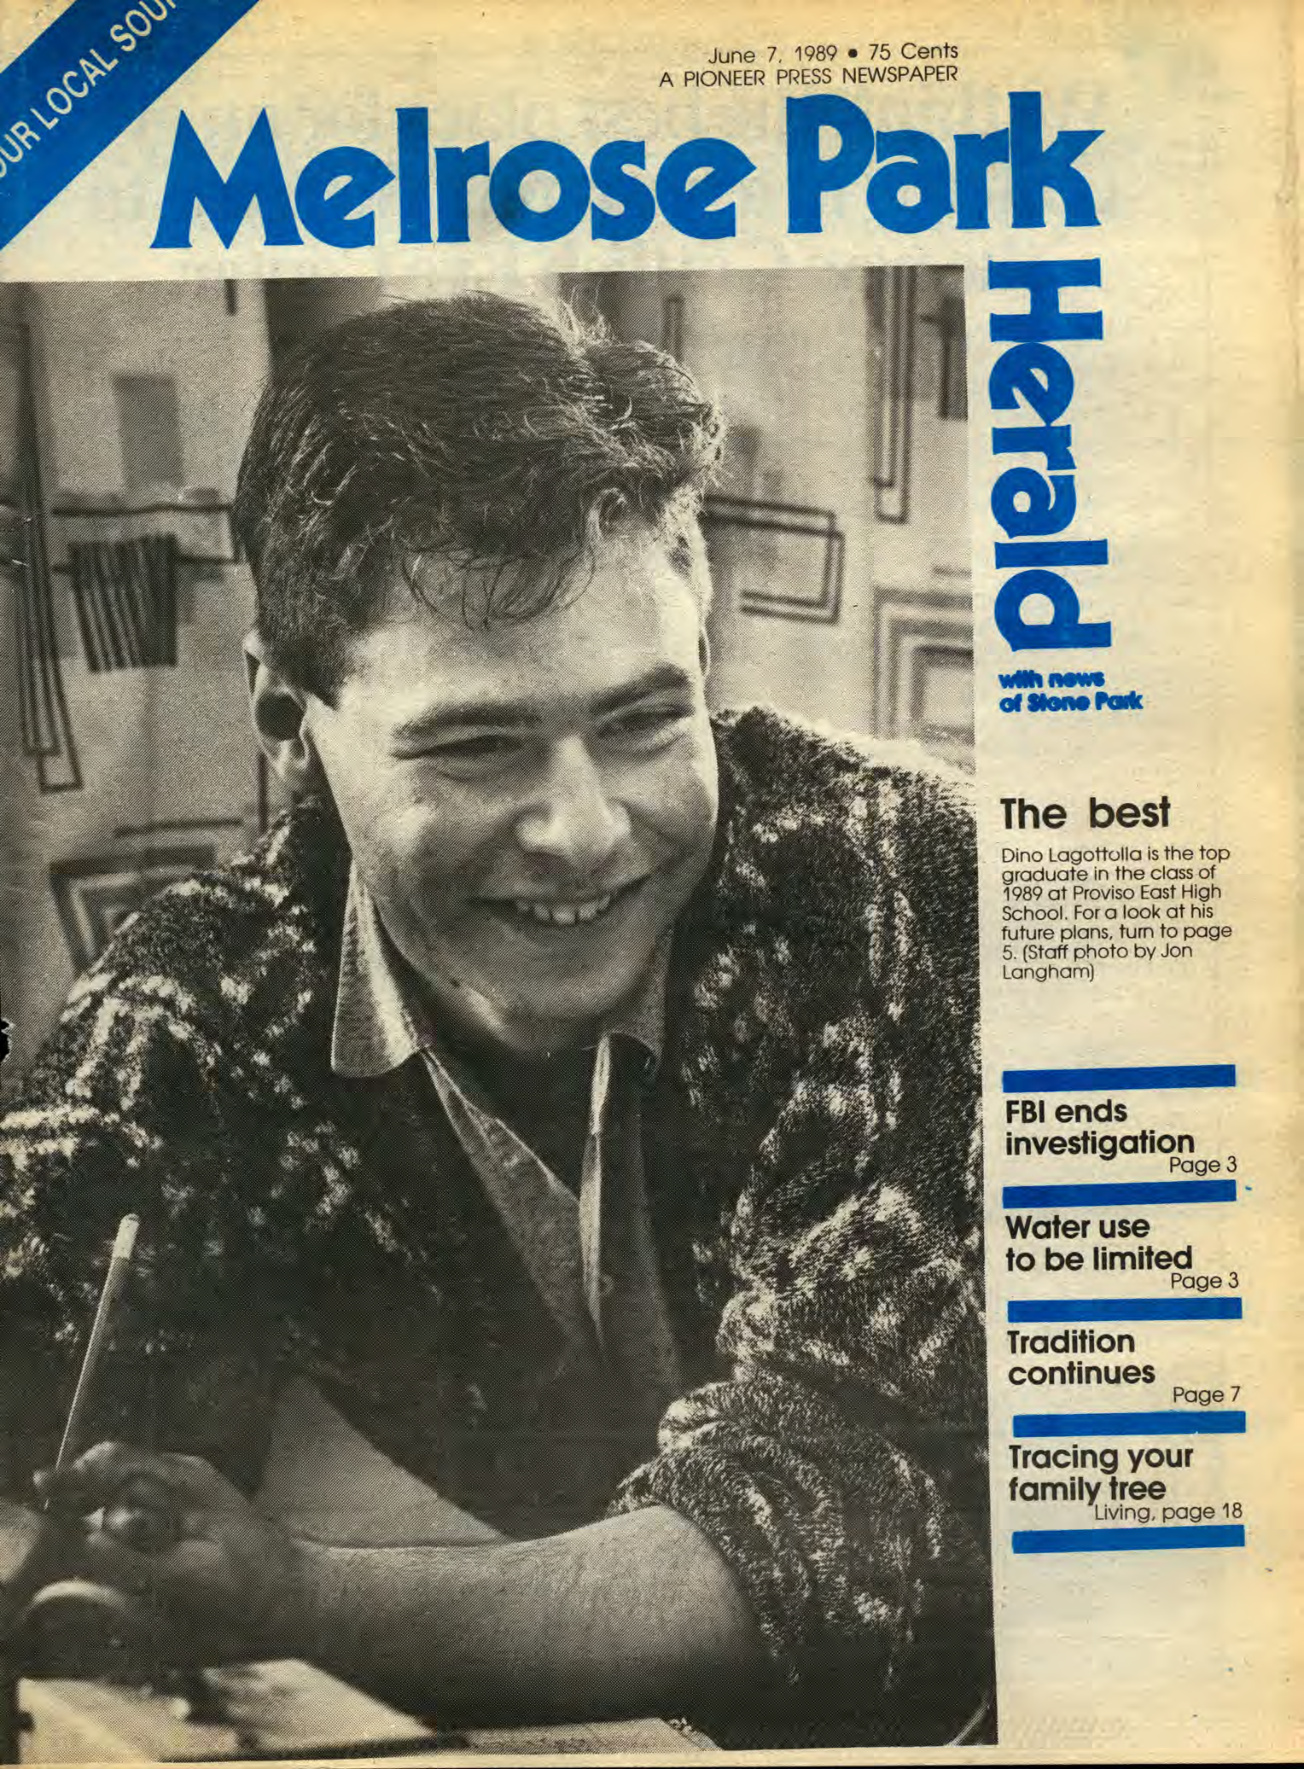 The Herald – 19890607